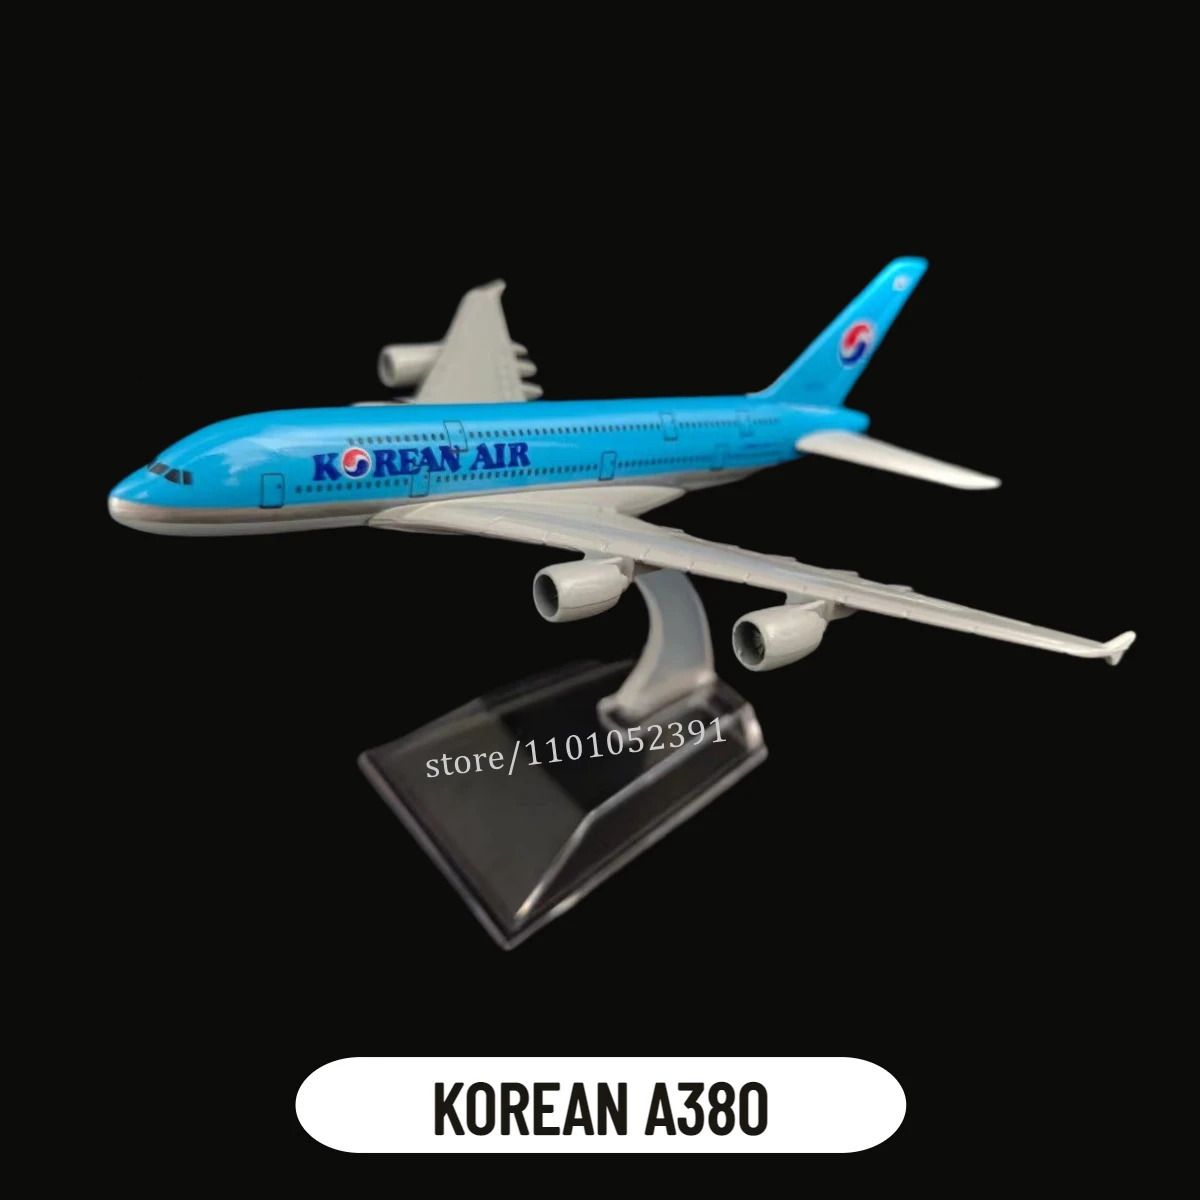 08. A380 coréen